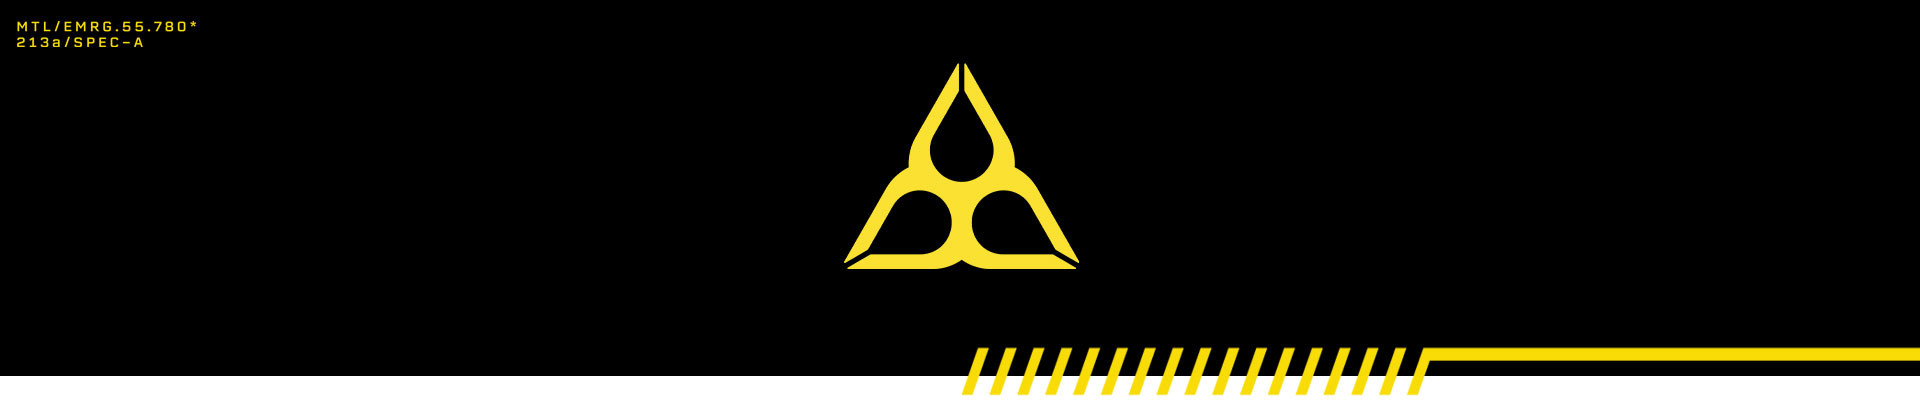 Orange computer readout information, shown with three tear drops arranged into a hazard symbol.